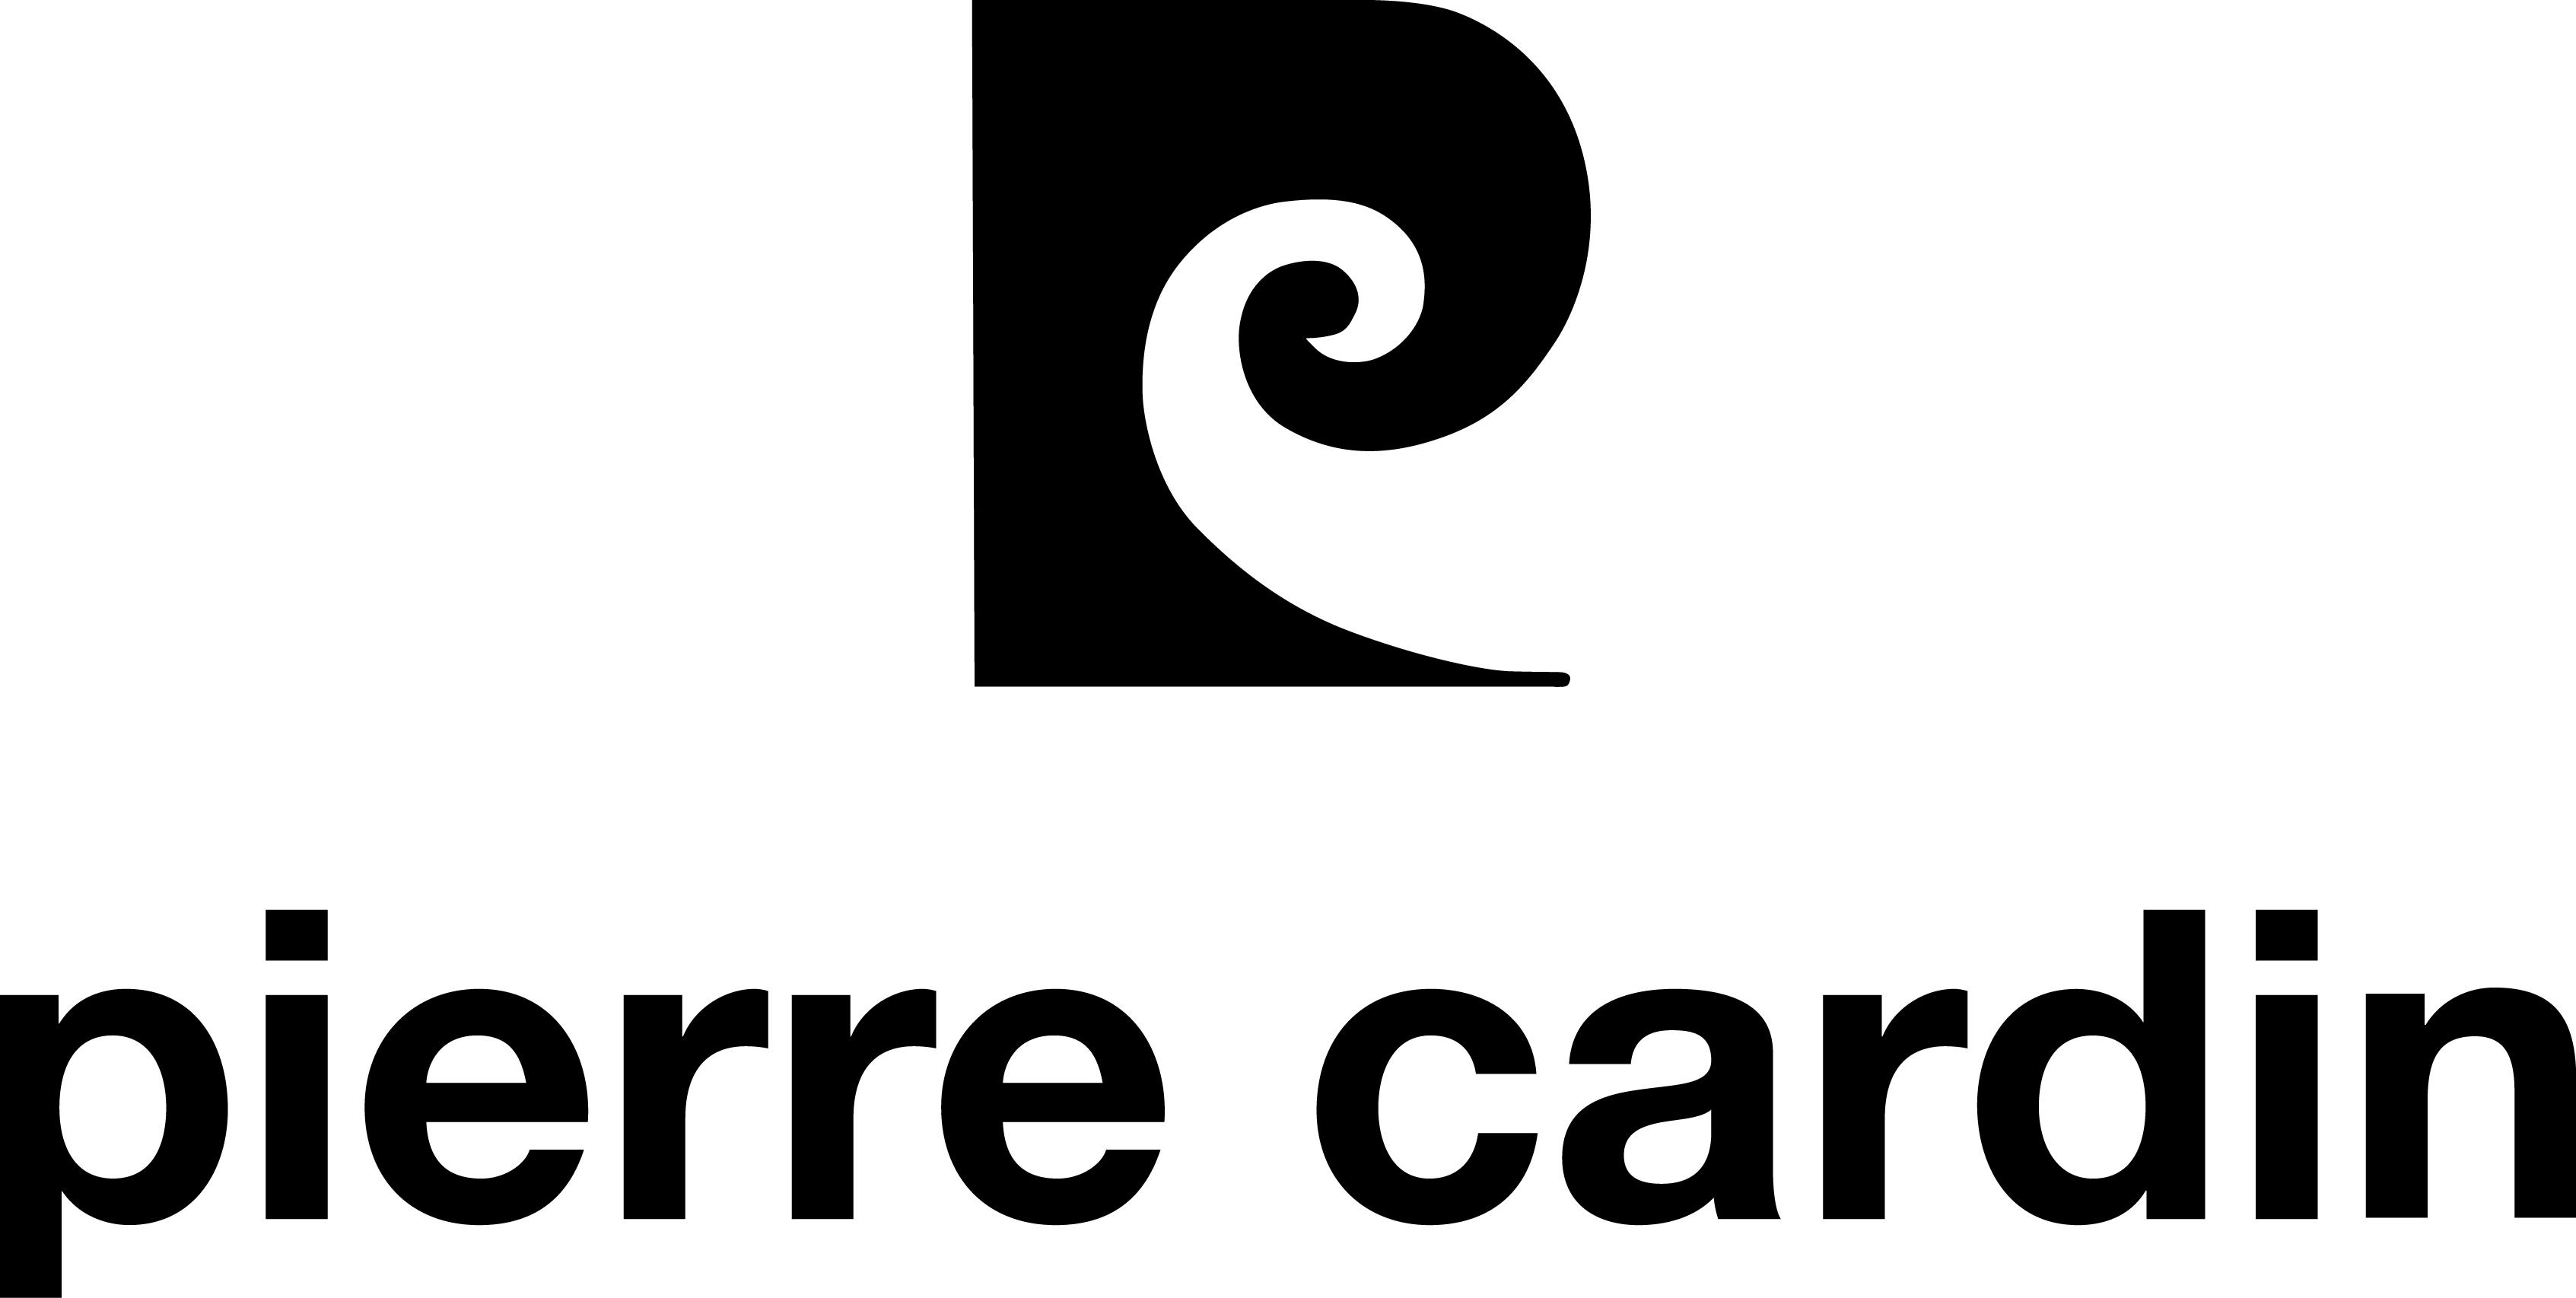 Pierre Cardin brand symbol.